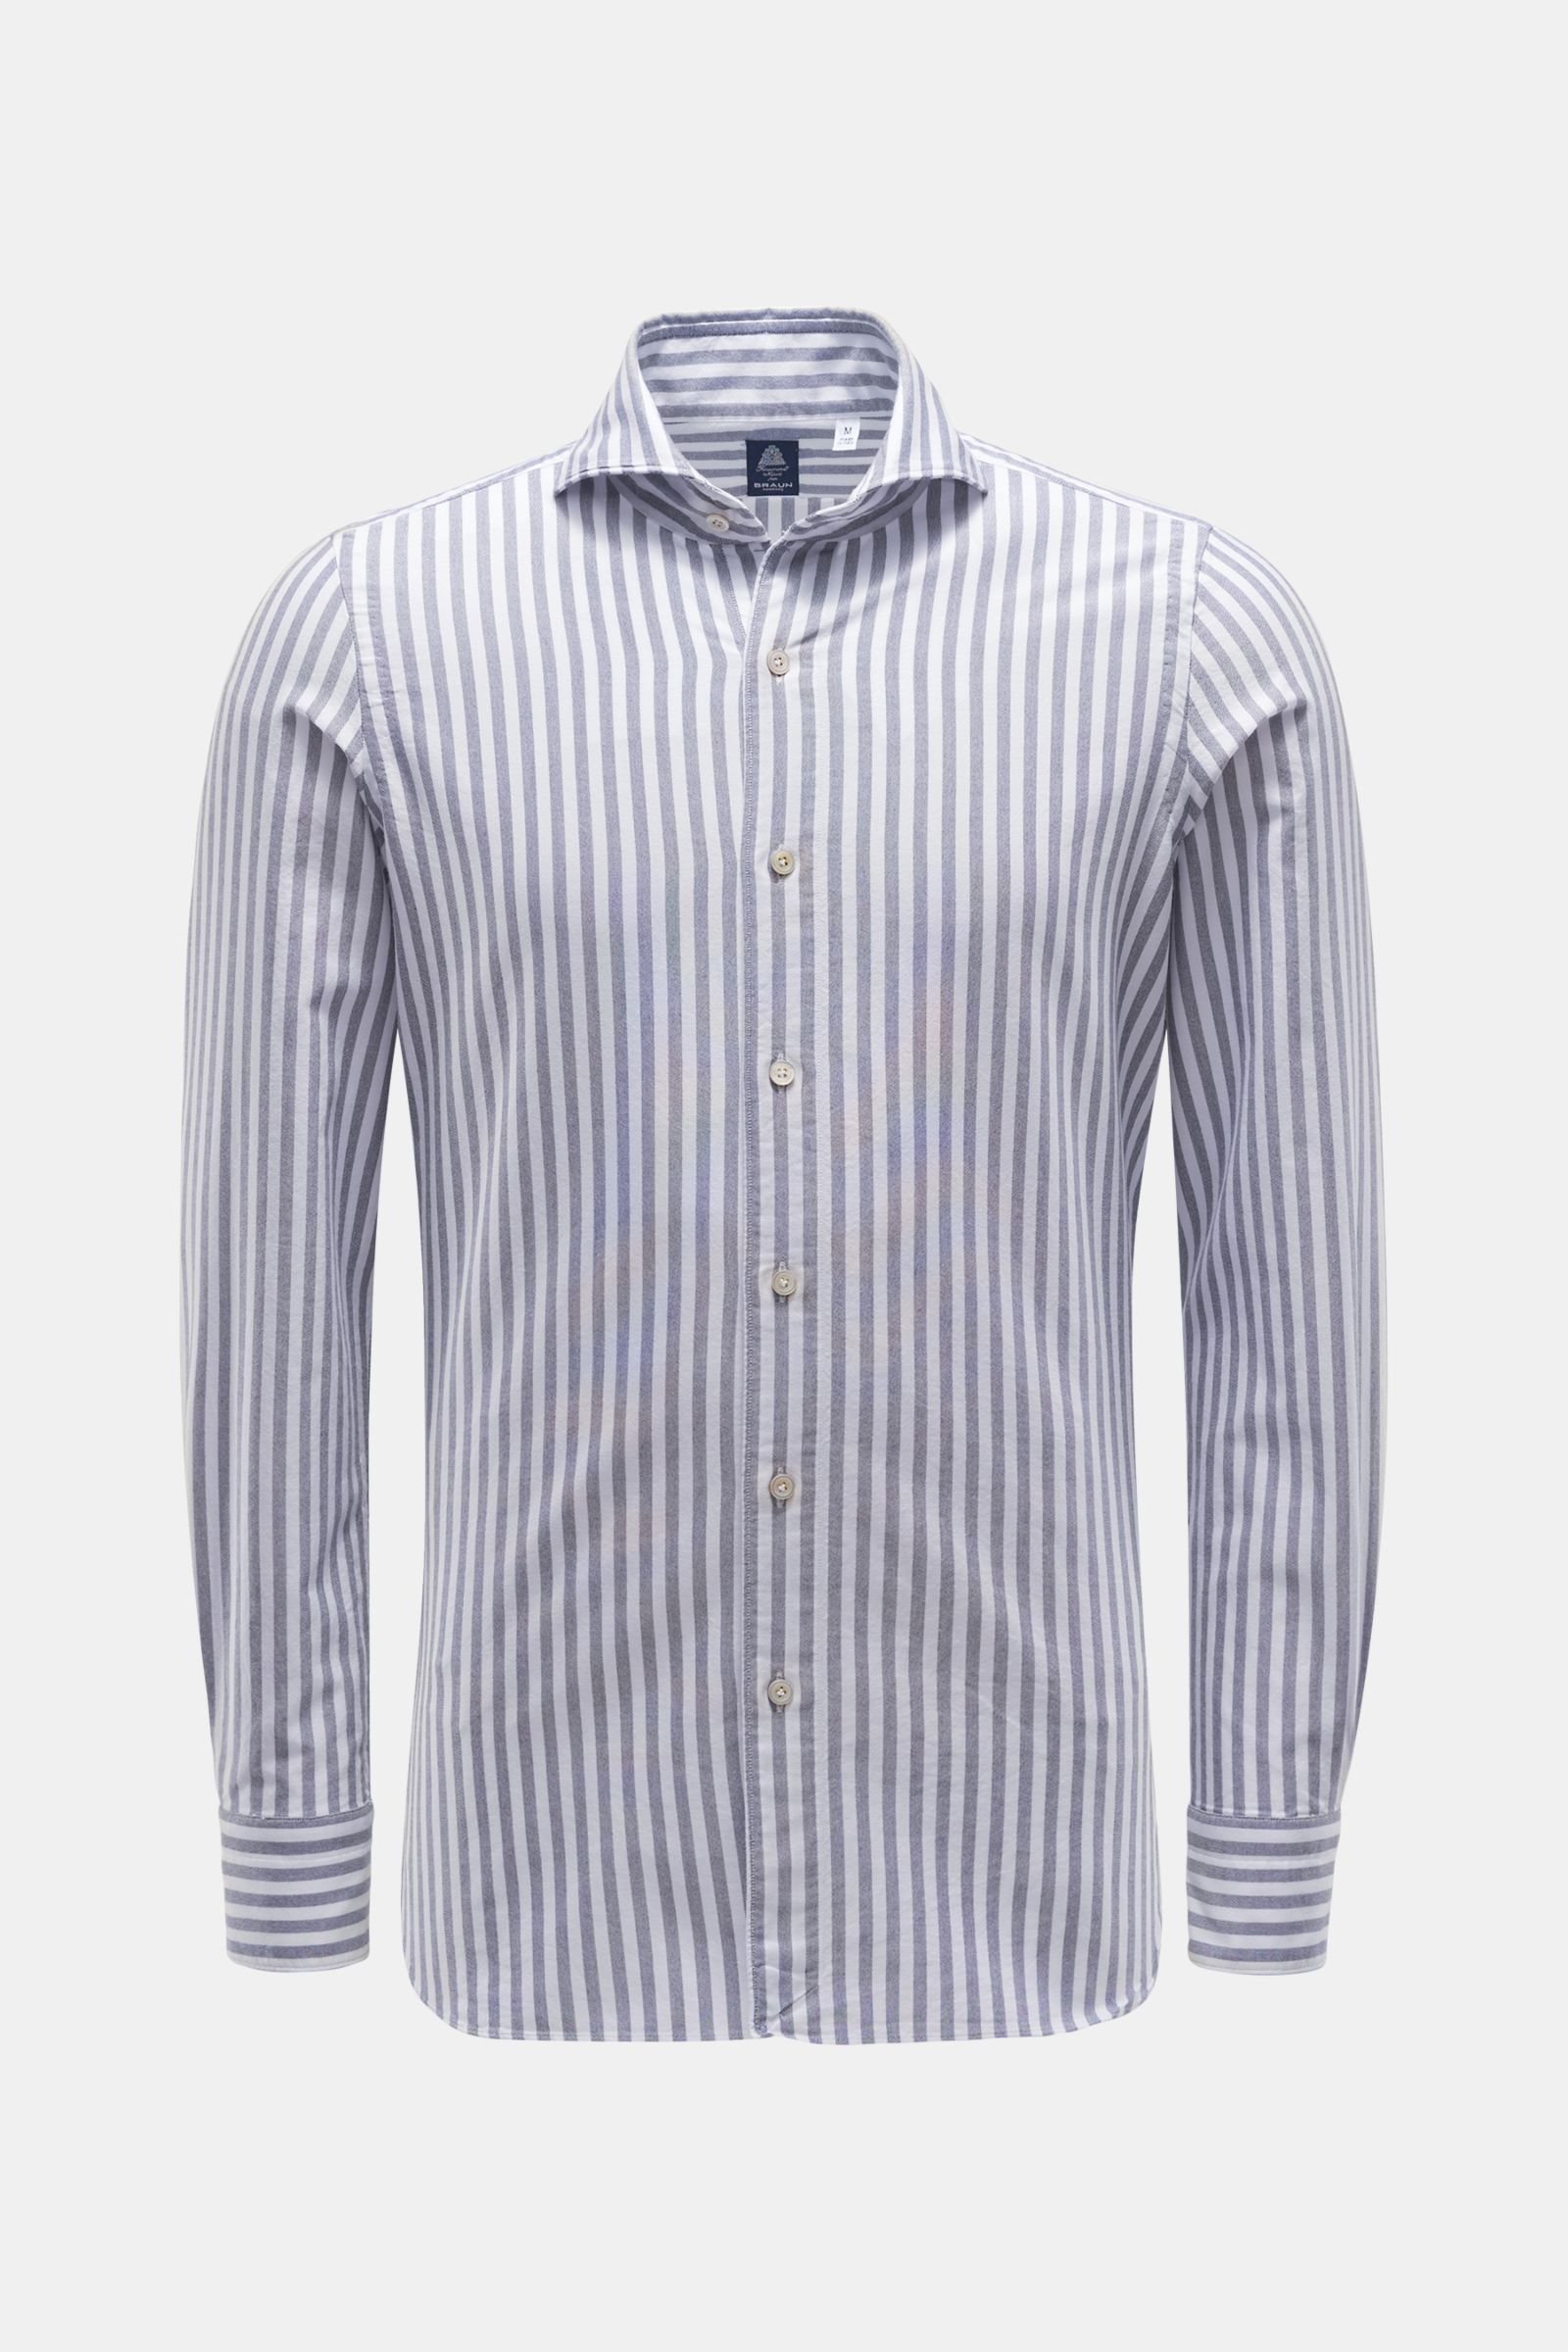 Oxford shirt 'Sergio Gaeta' shark collar grey-blue/white striped